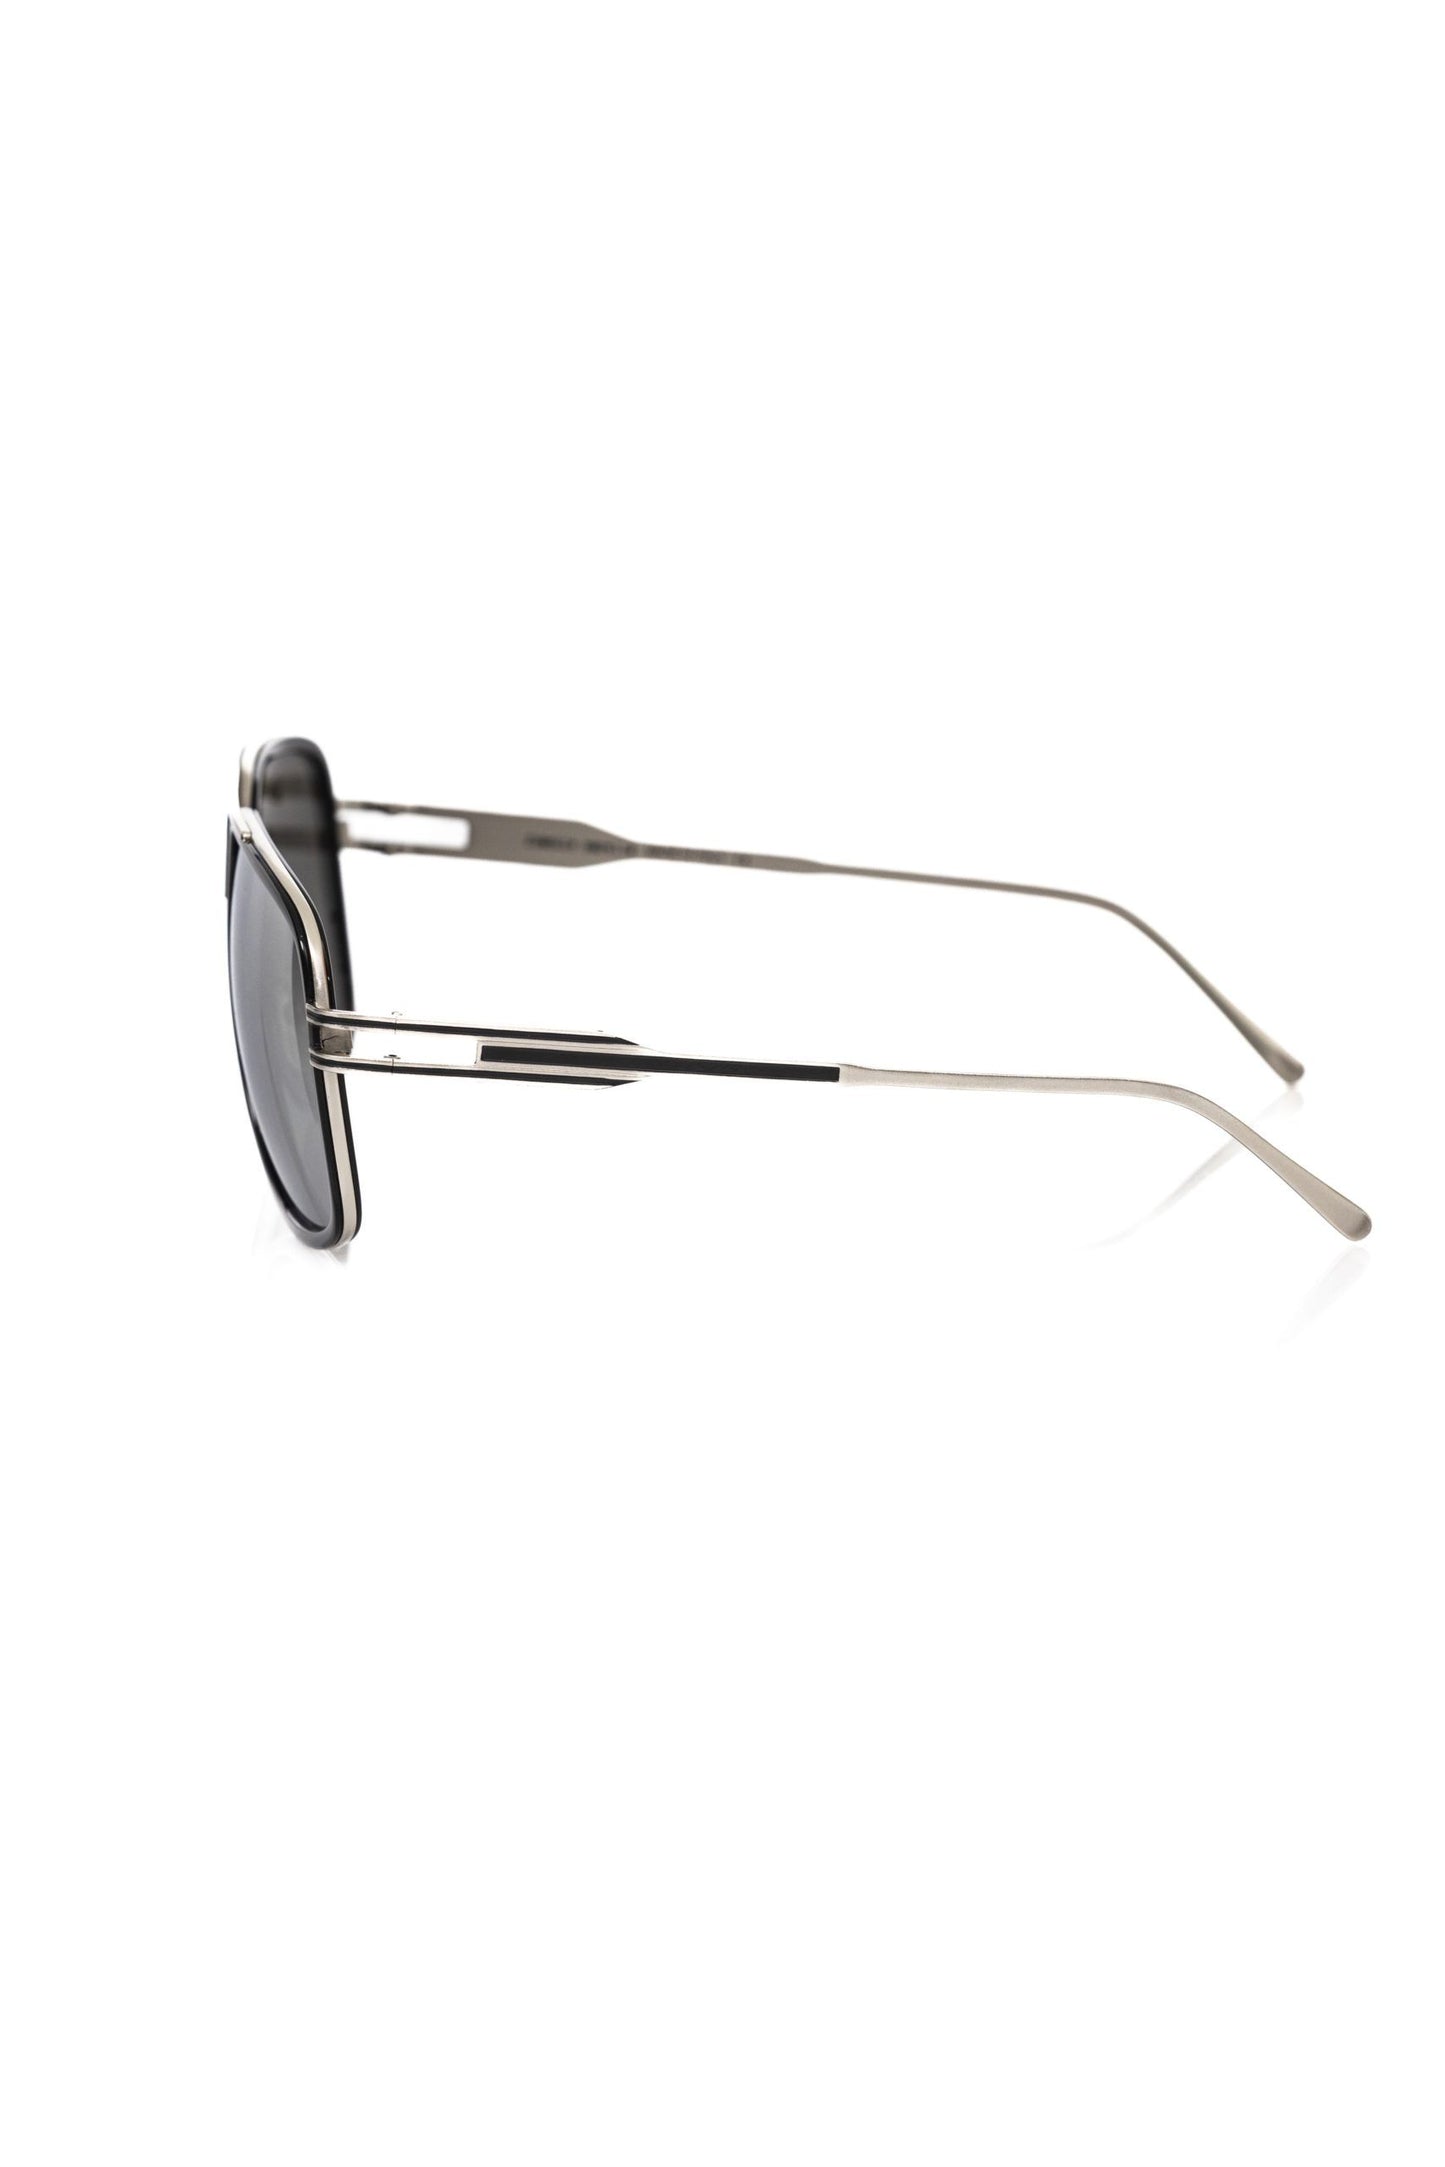 Frankie Morello FRMO-22127 Black Metallic Fibre Sunglasses